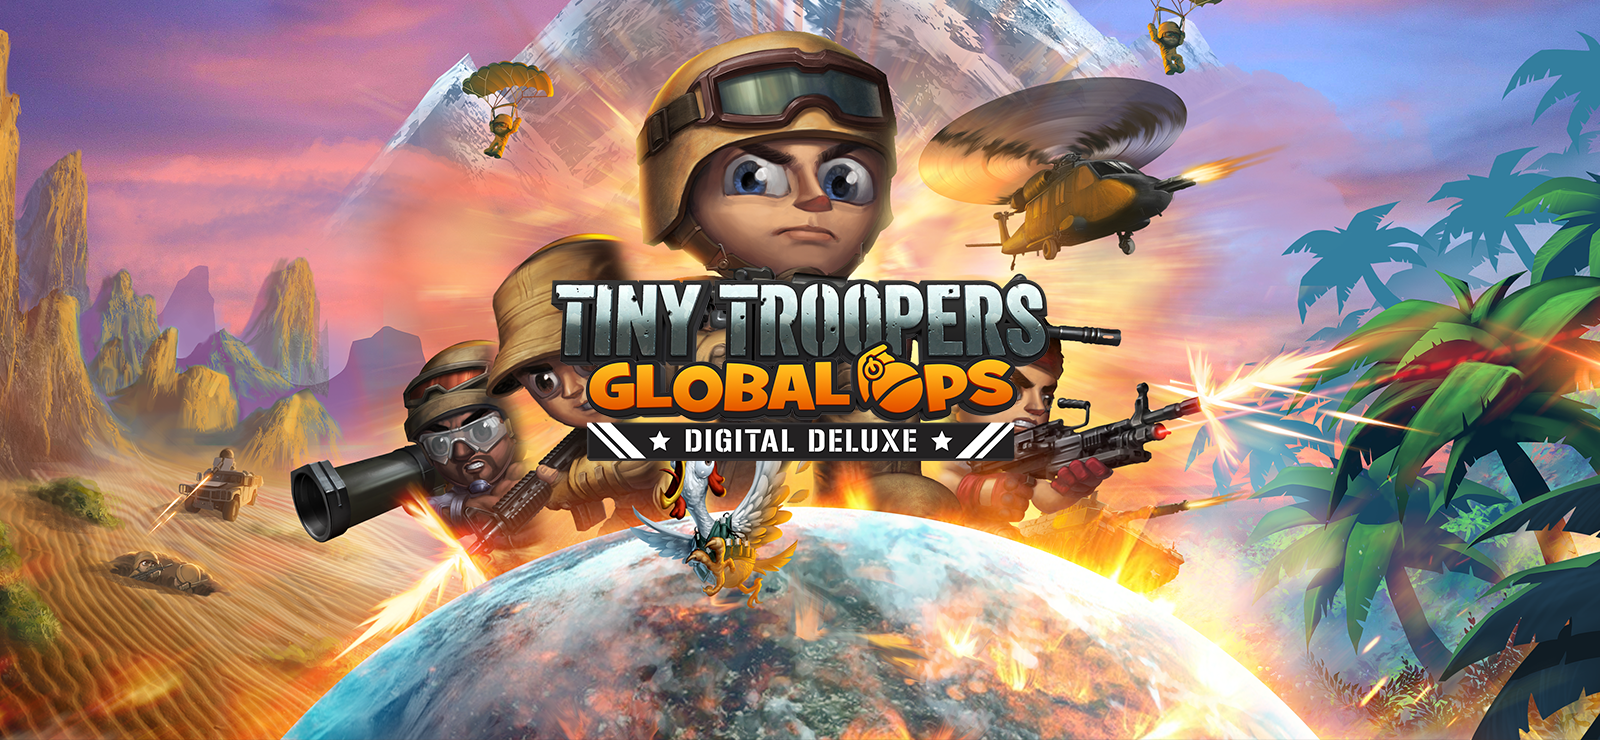 Tiny Troopers: Global Ops - Digital Deluxe Bundle